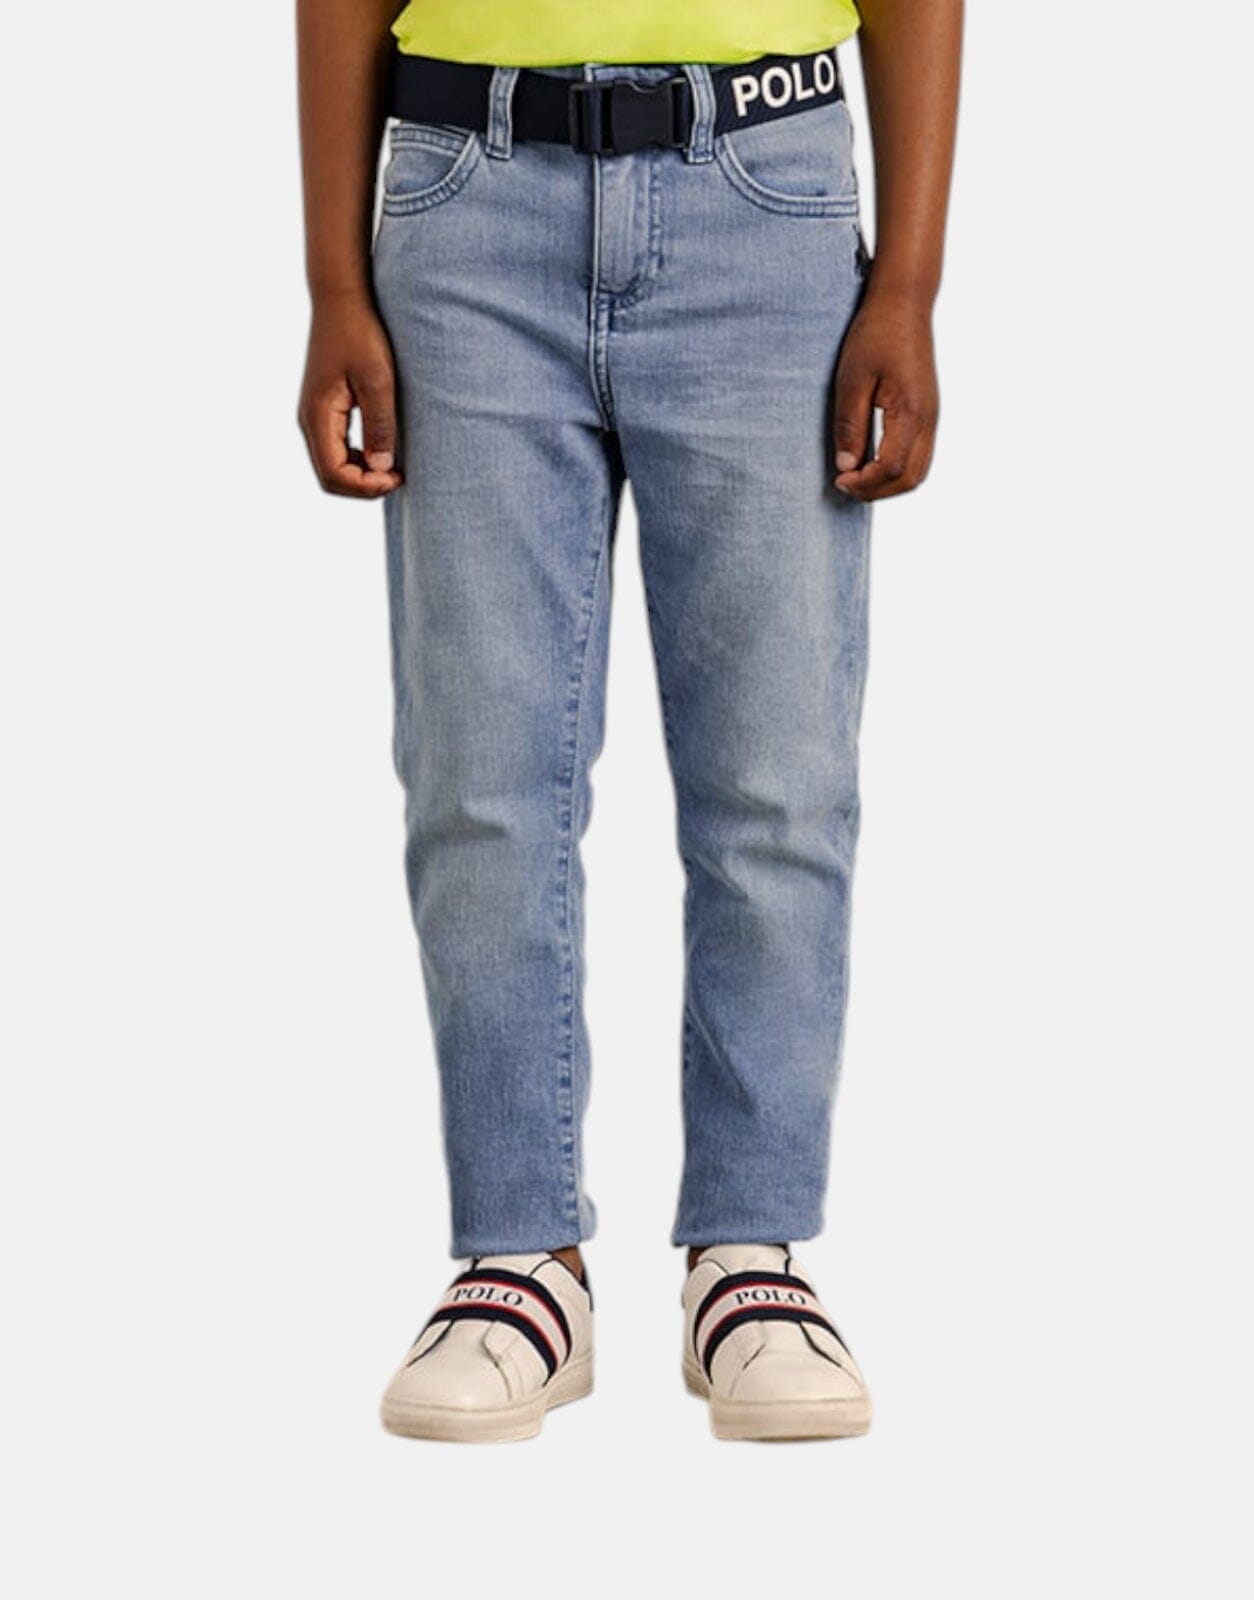 Polo Boys Jude Belted Slim Jeans Medium Wash - Subwear